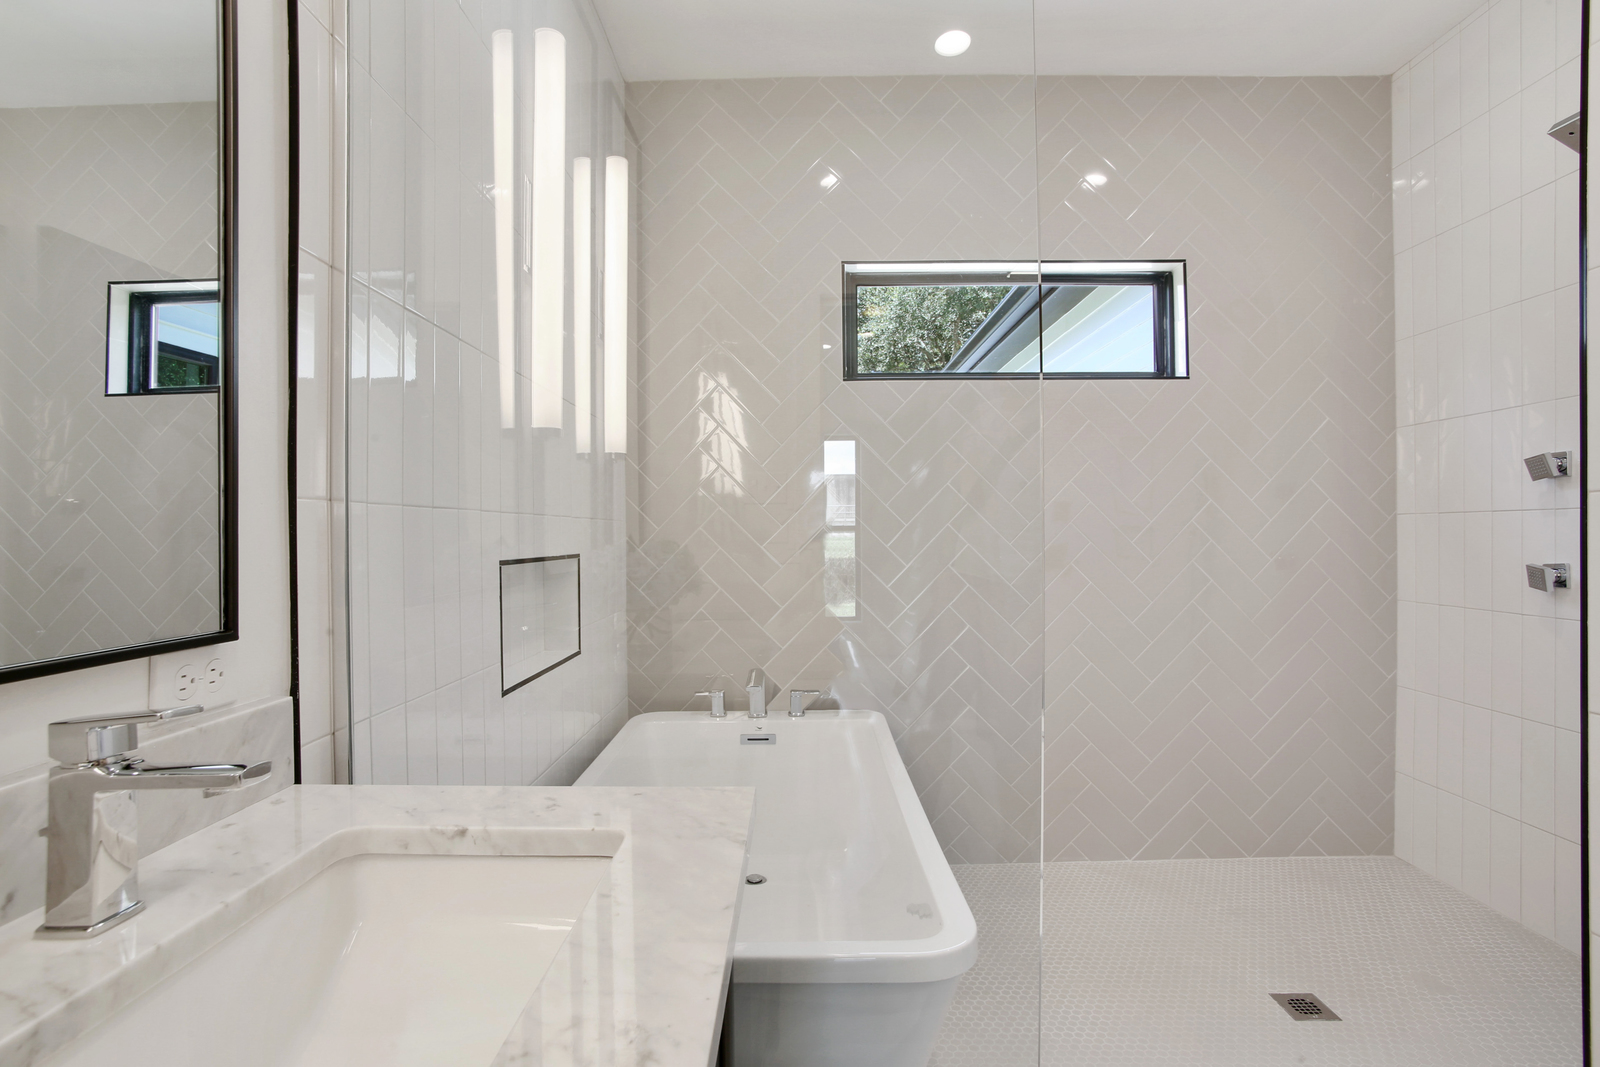 Luxury master bathroom of Pratt House new construction custom home designed and built by DMG Design+Build